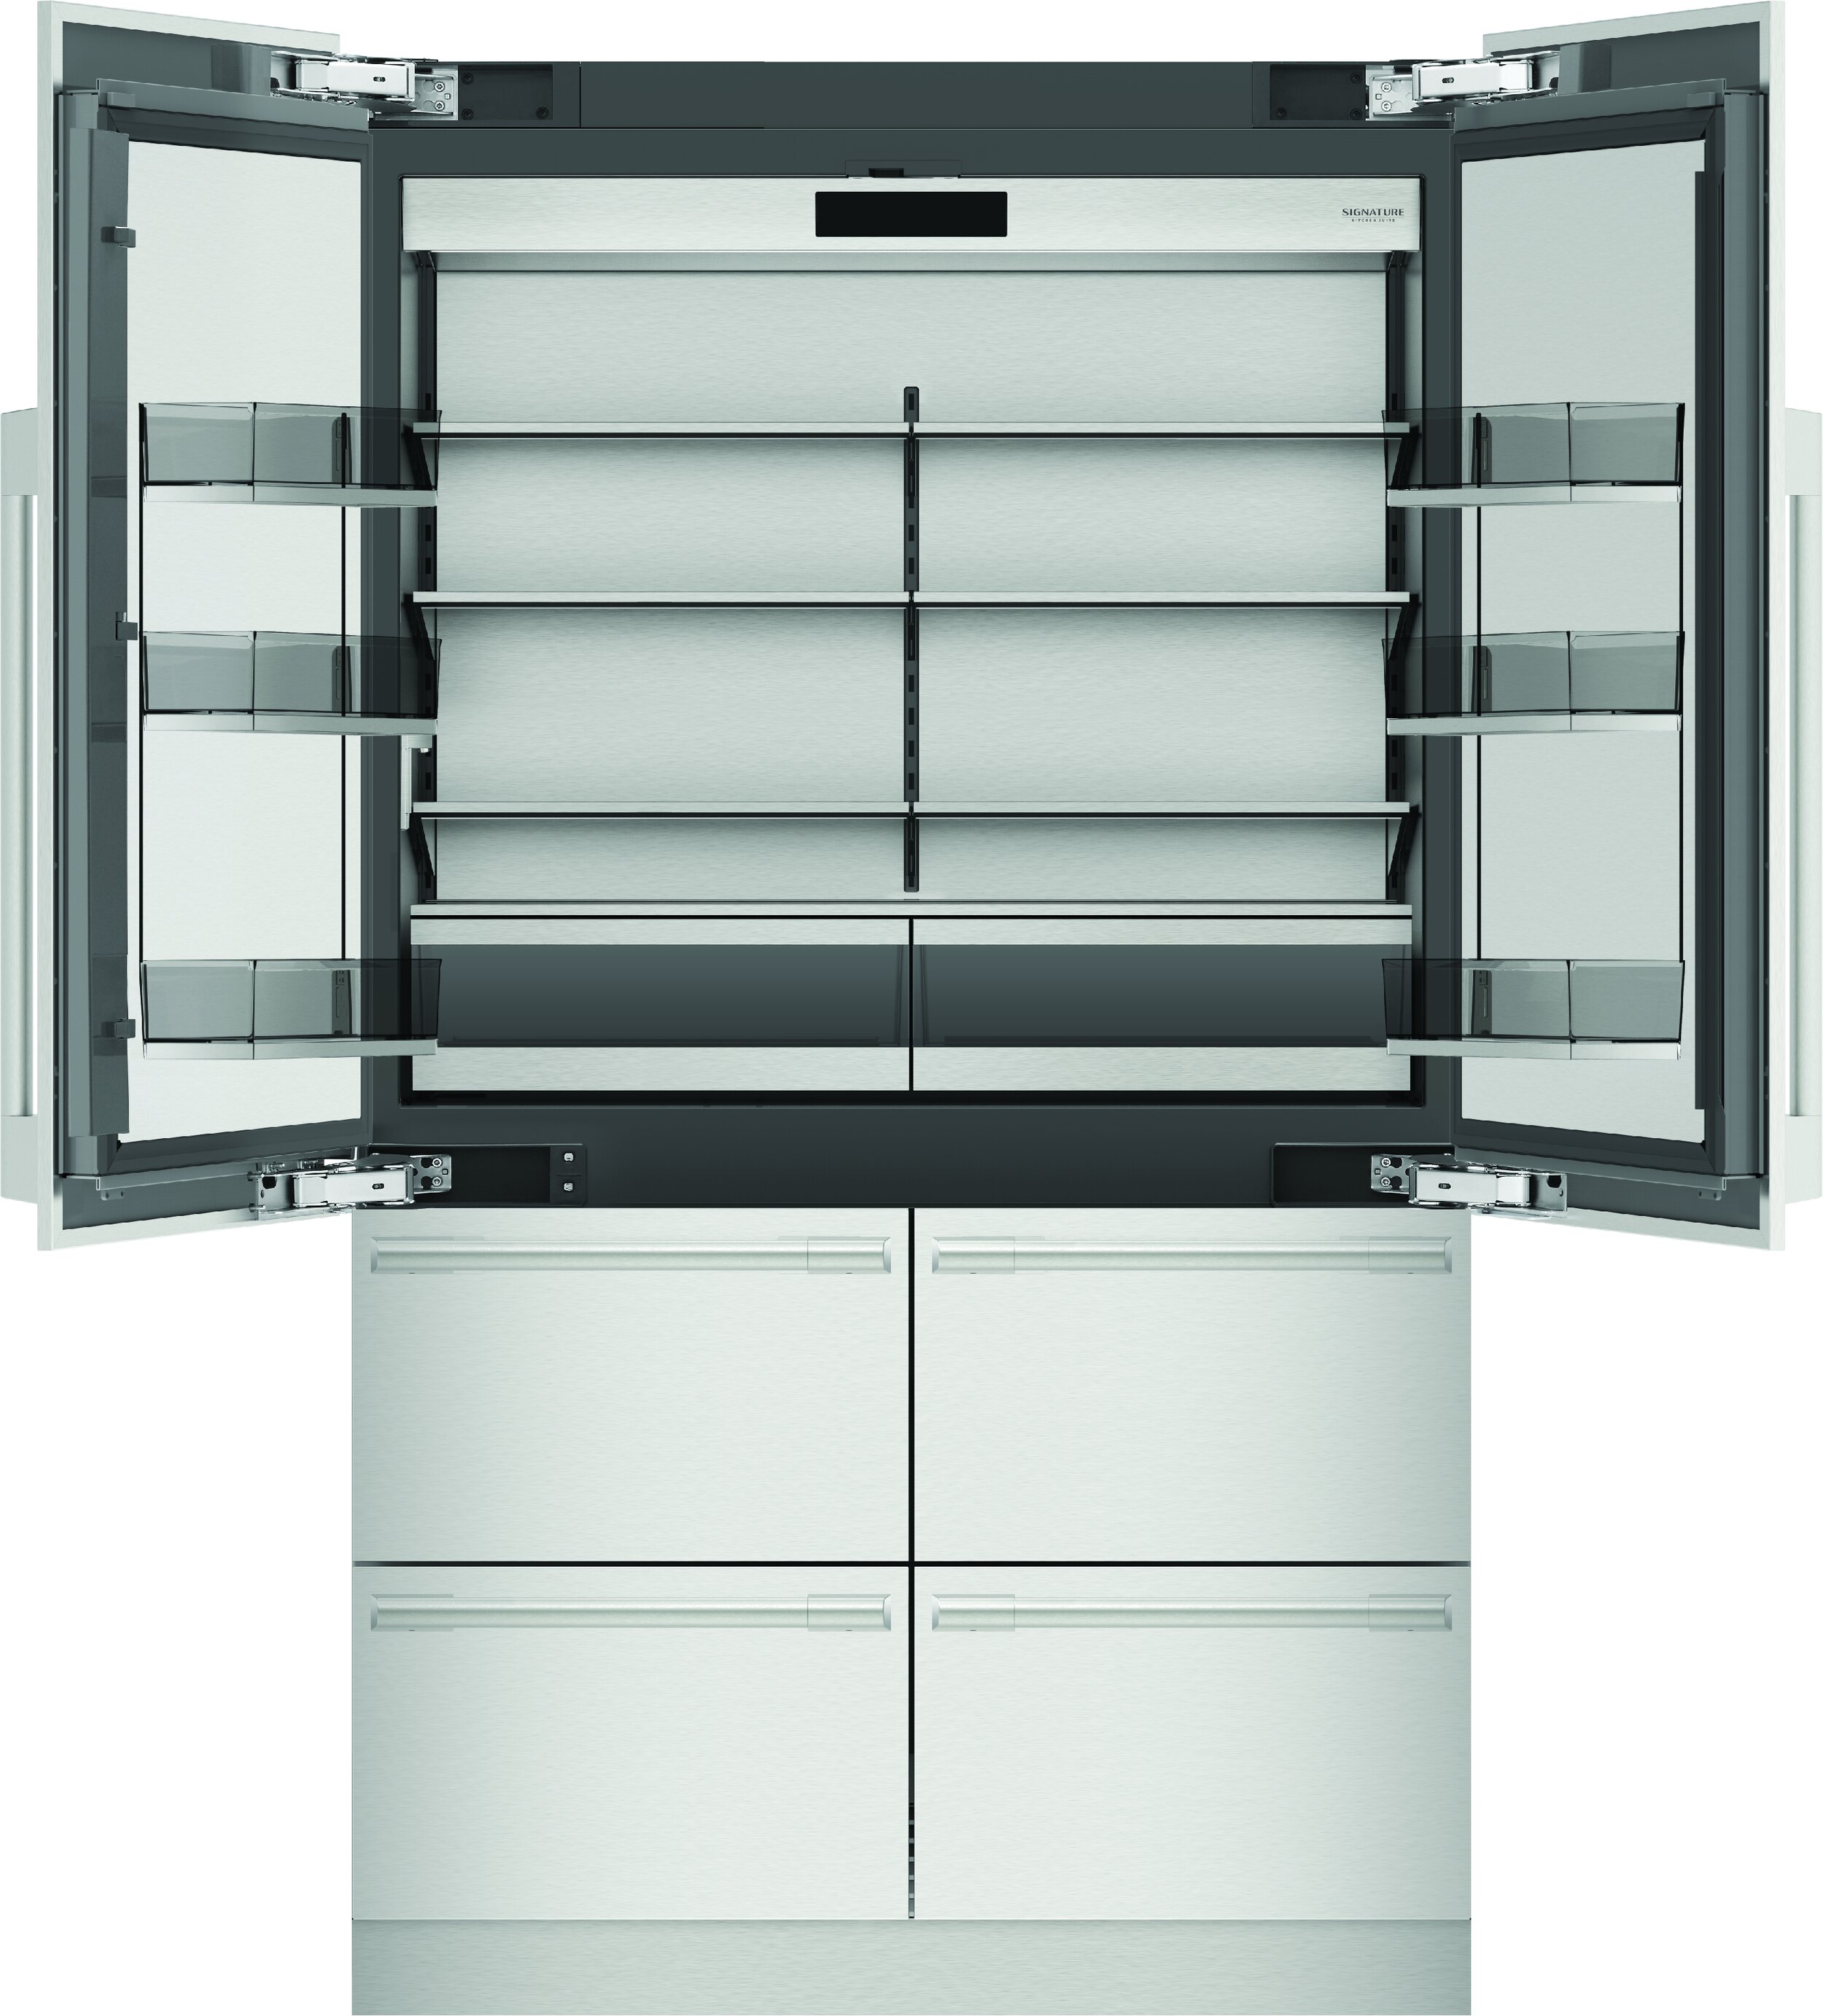 SKS 48-inch French Door Refrigerator(1).jpg